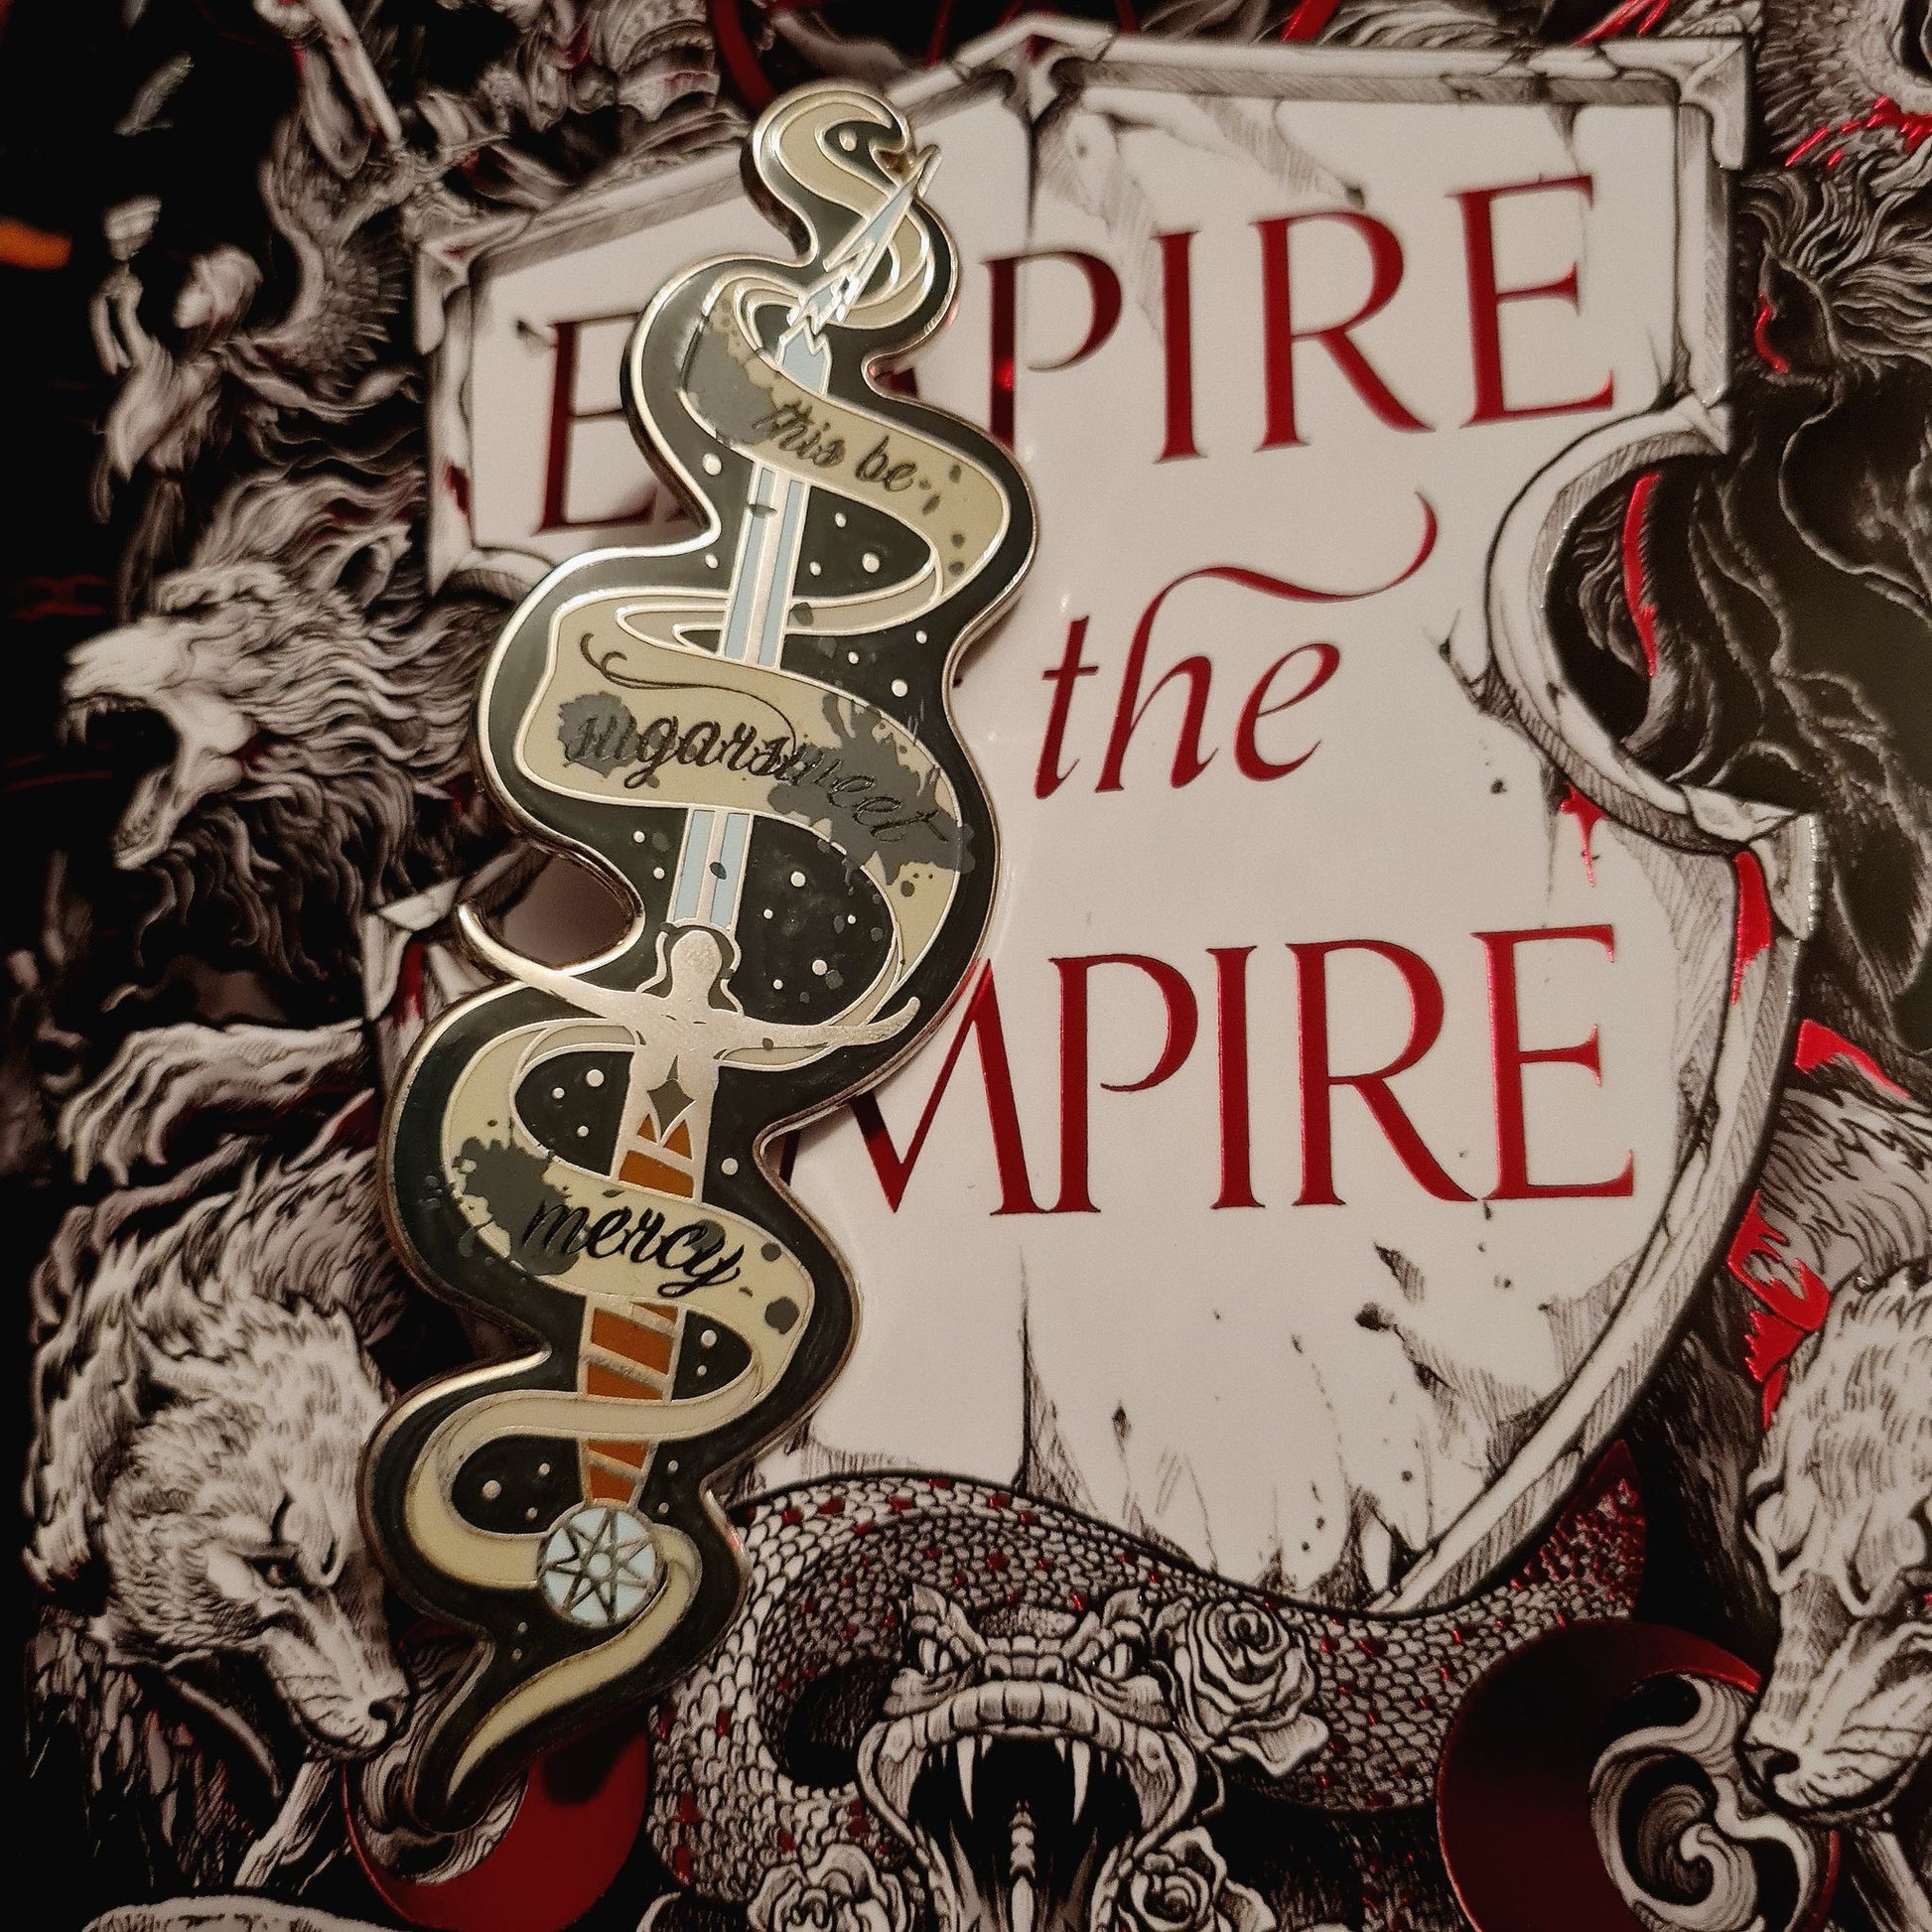 Ashdrinker, Empire of the Vampire by Jay Kristoff inspired enamel pin. 